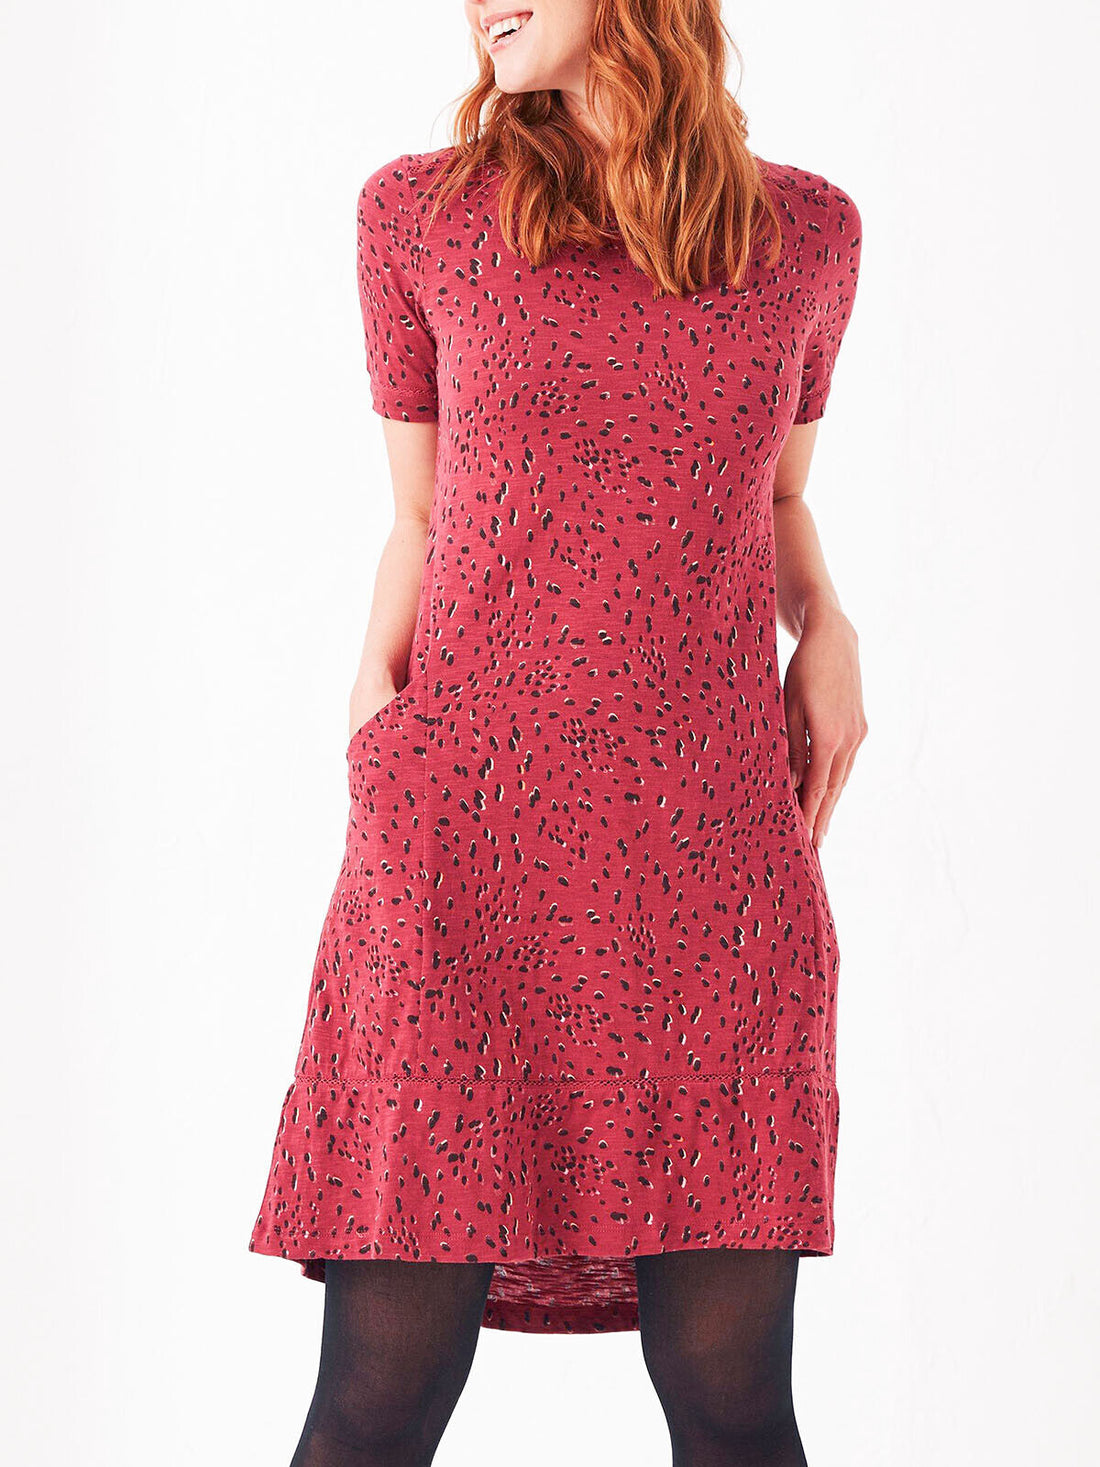 EX Fat Face Berry Simone Shadow Dot Jersey Dress Sizes 8 10 12 14 16 22 RRP £46